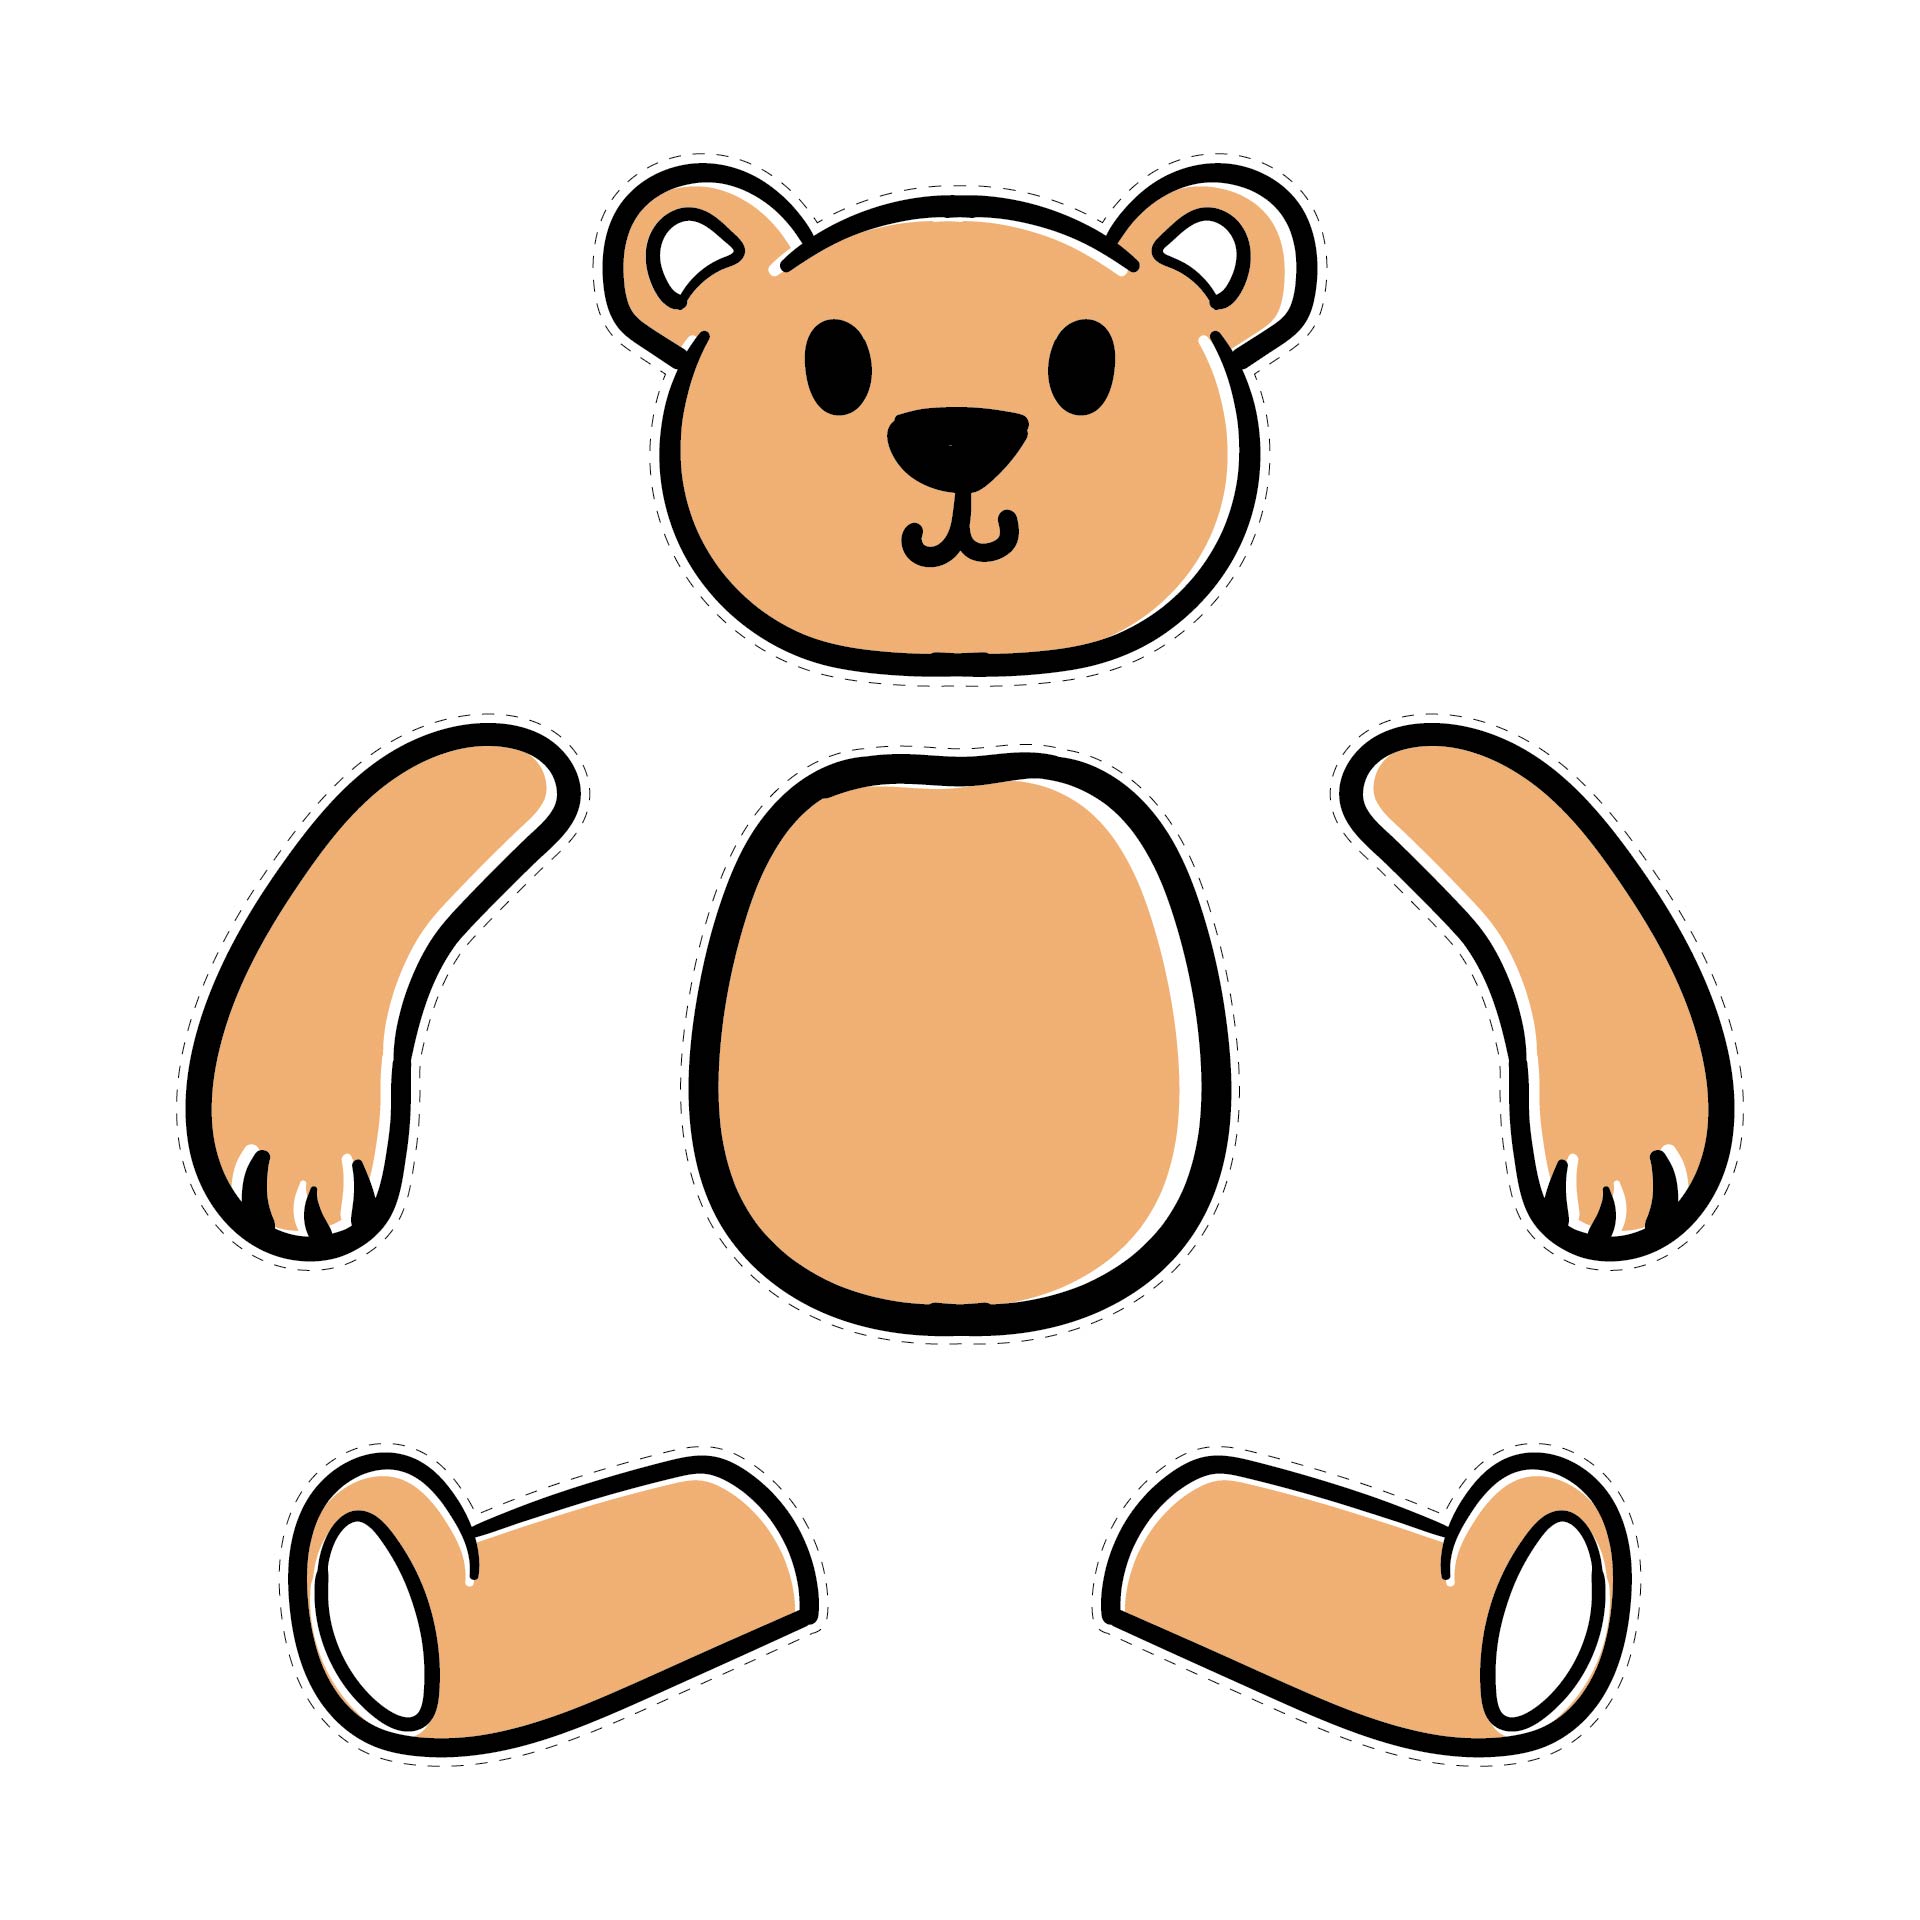 Free Teddy Bear Patterns Printable_826317